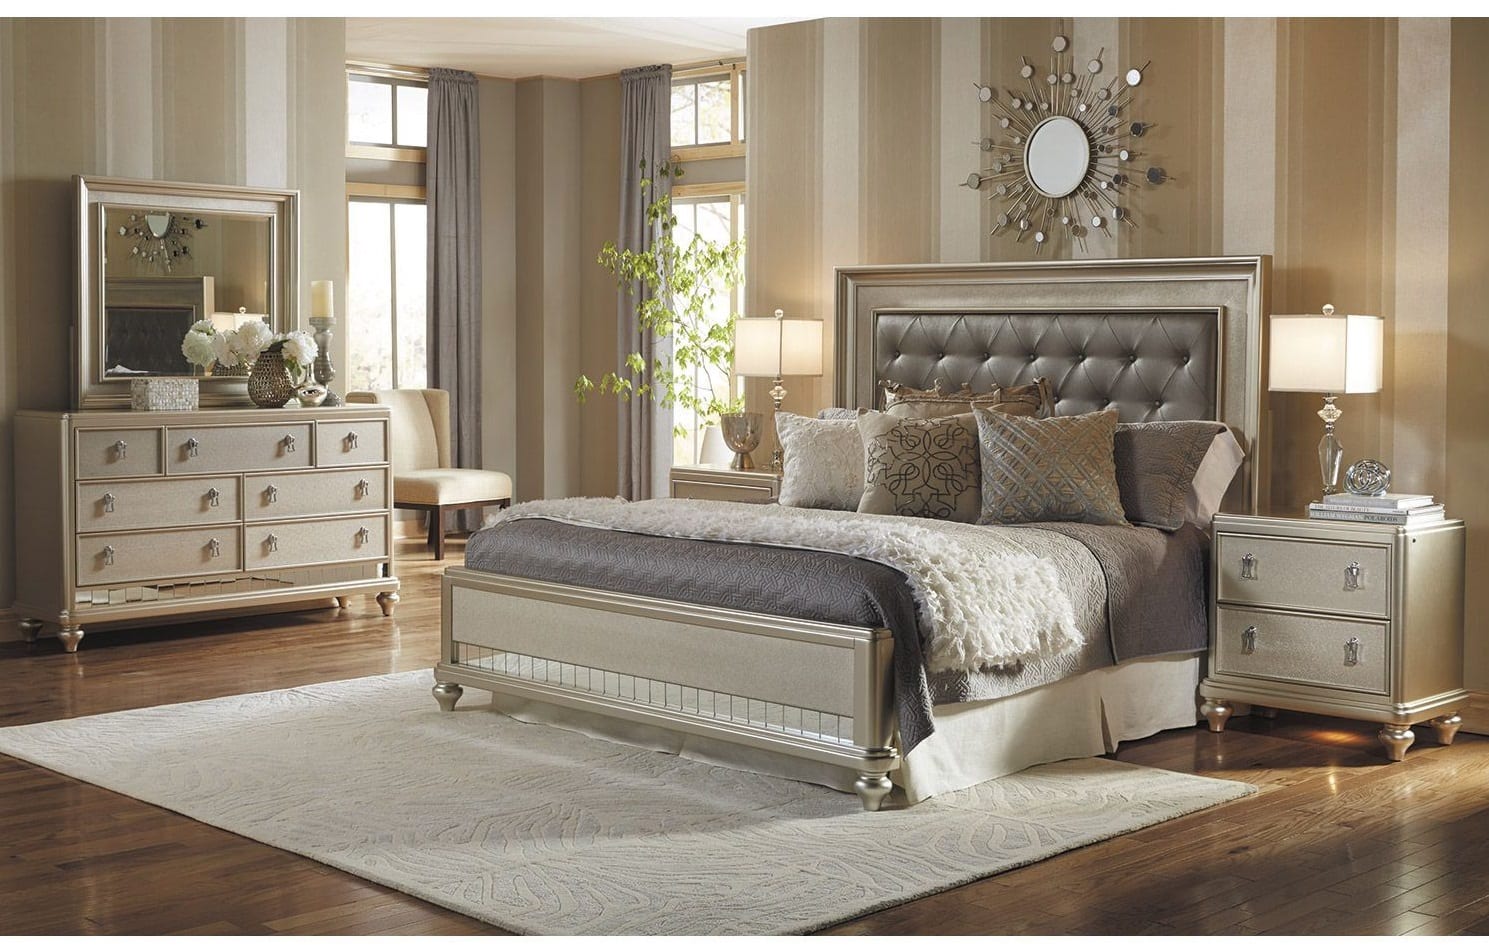 isabella cream bedroom furniture